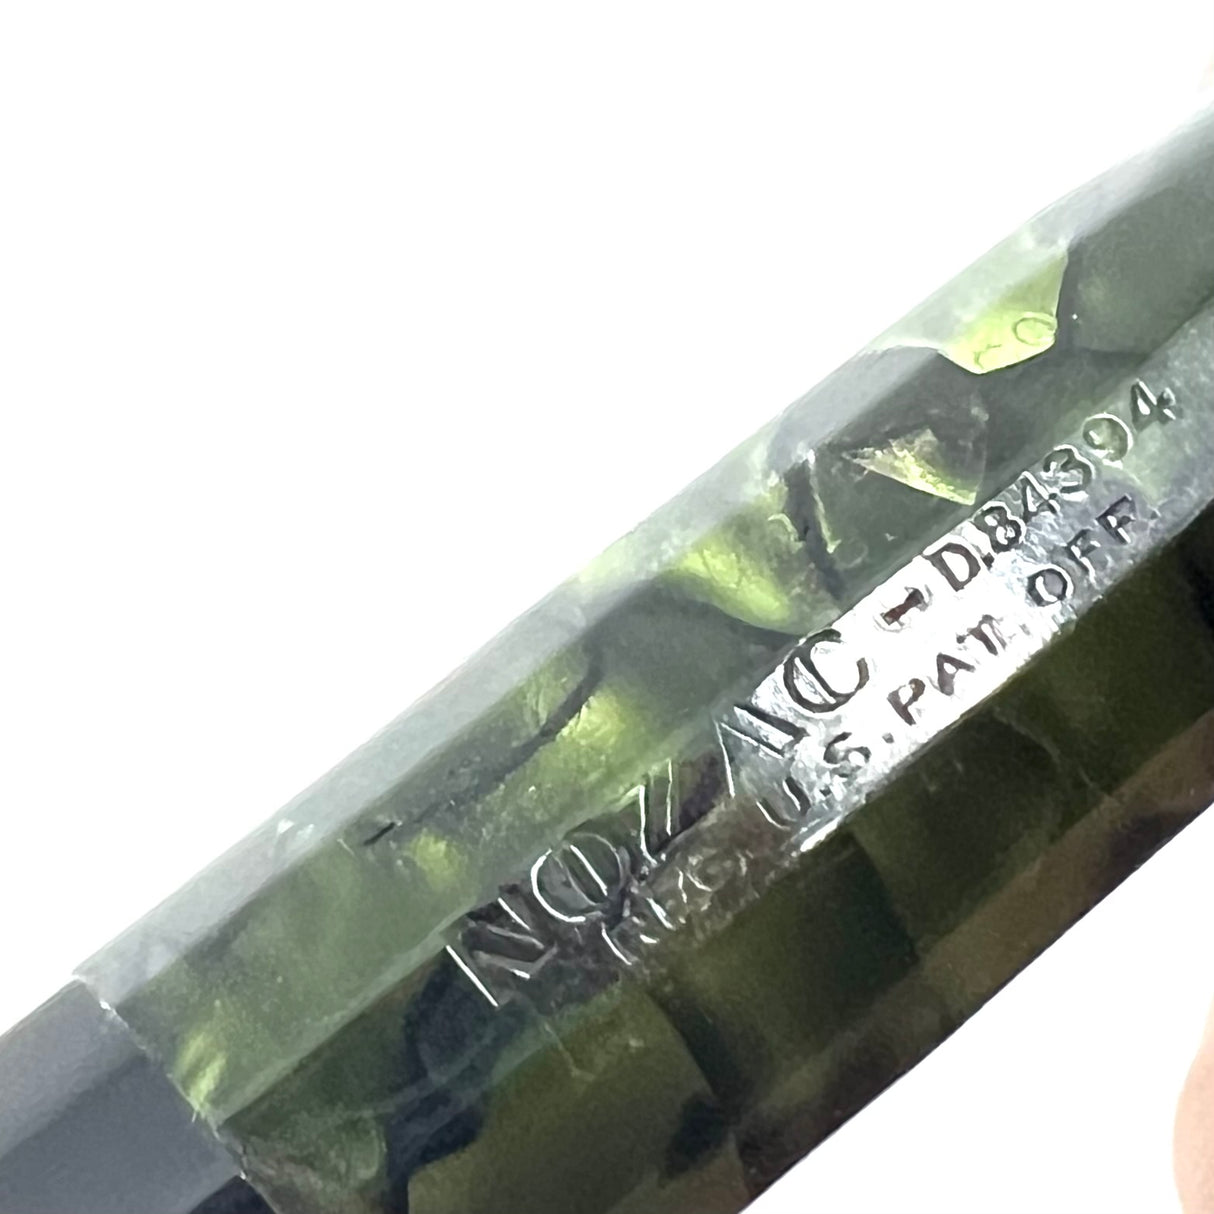 Conklin 7M Nozac Green Marble Fountain Pen